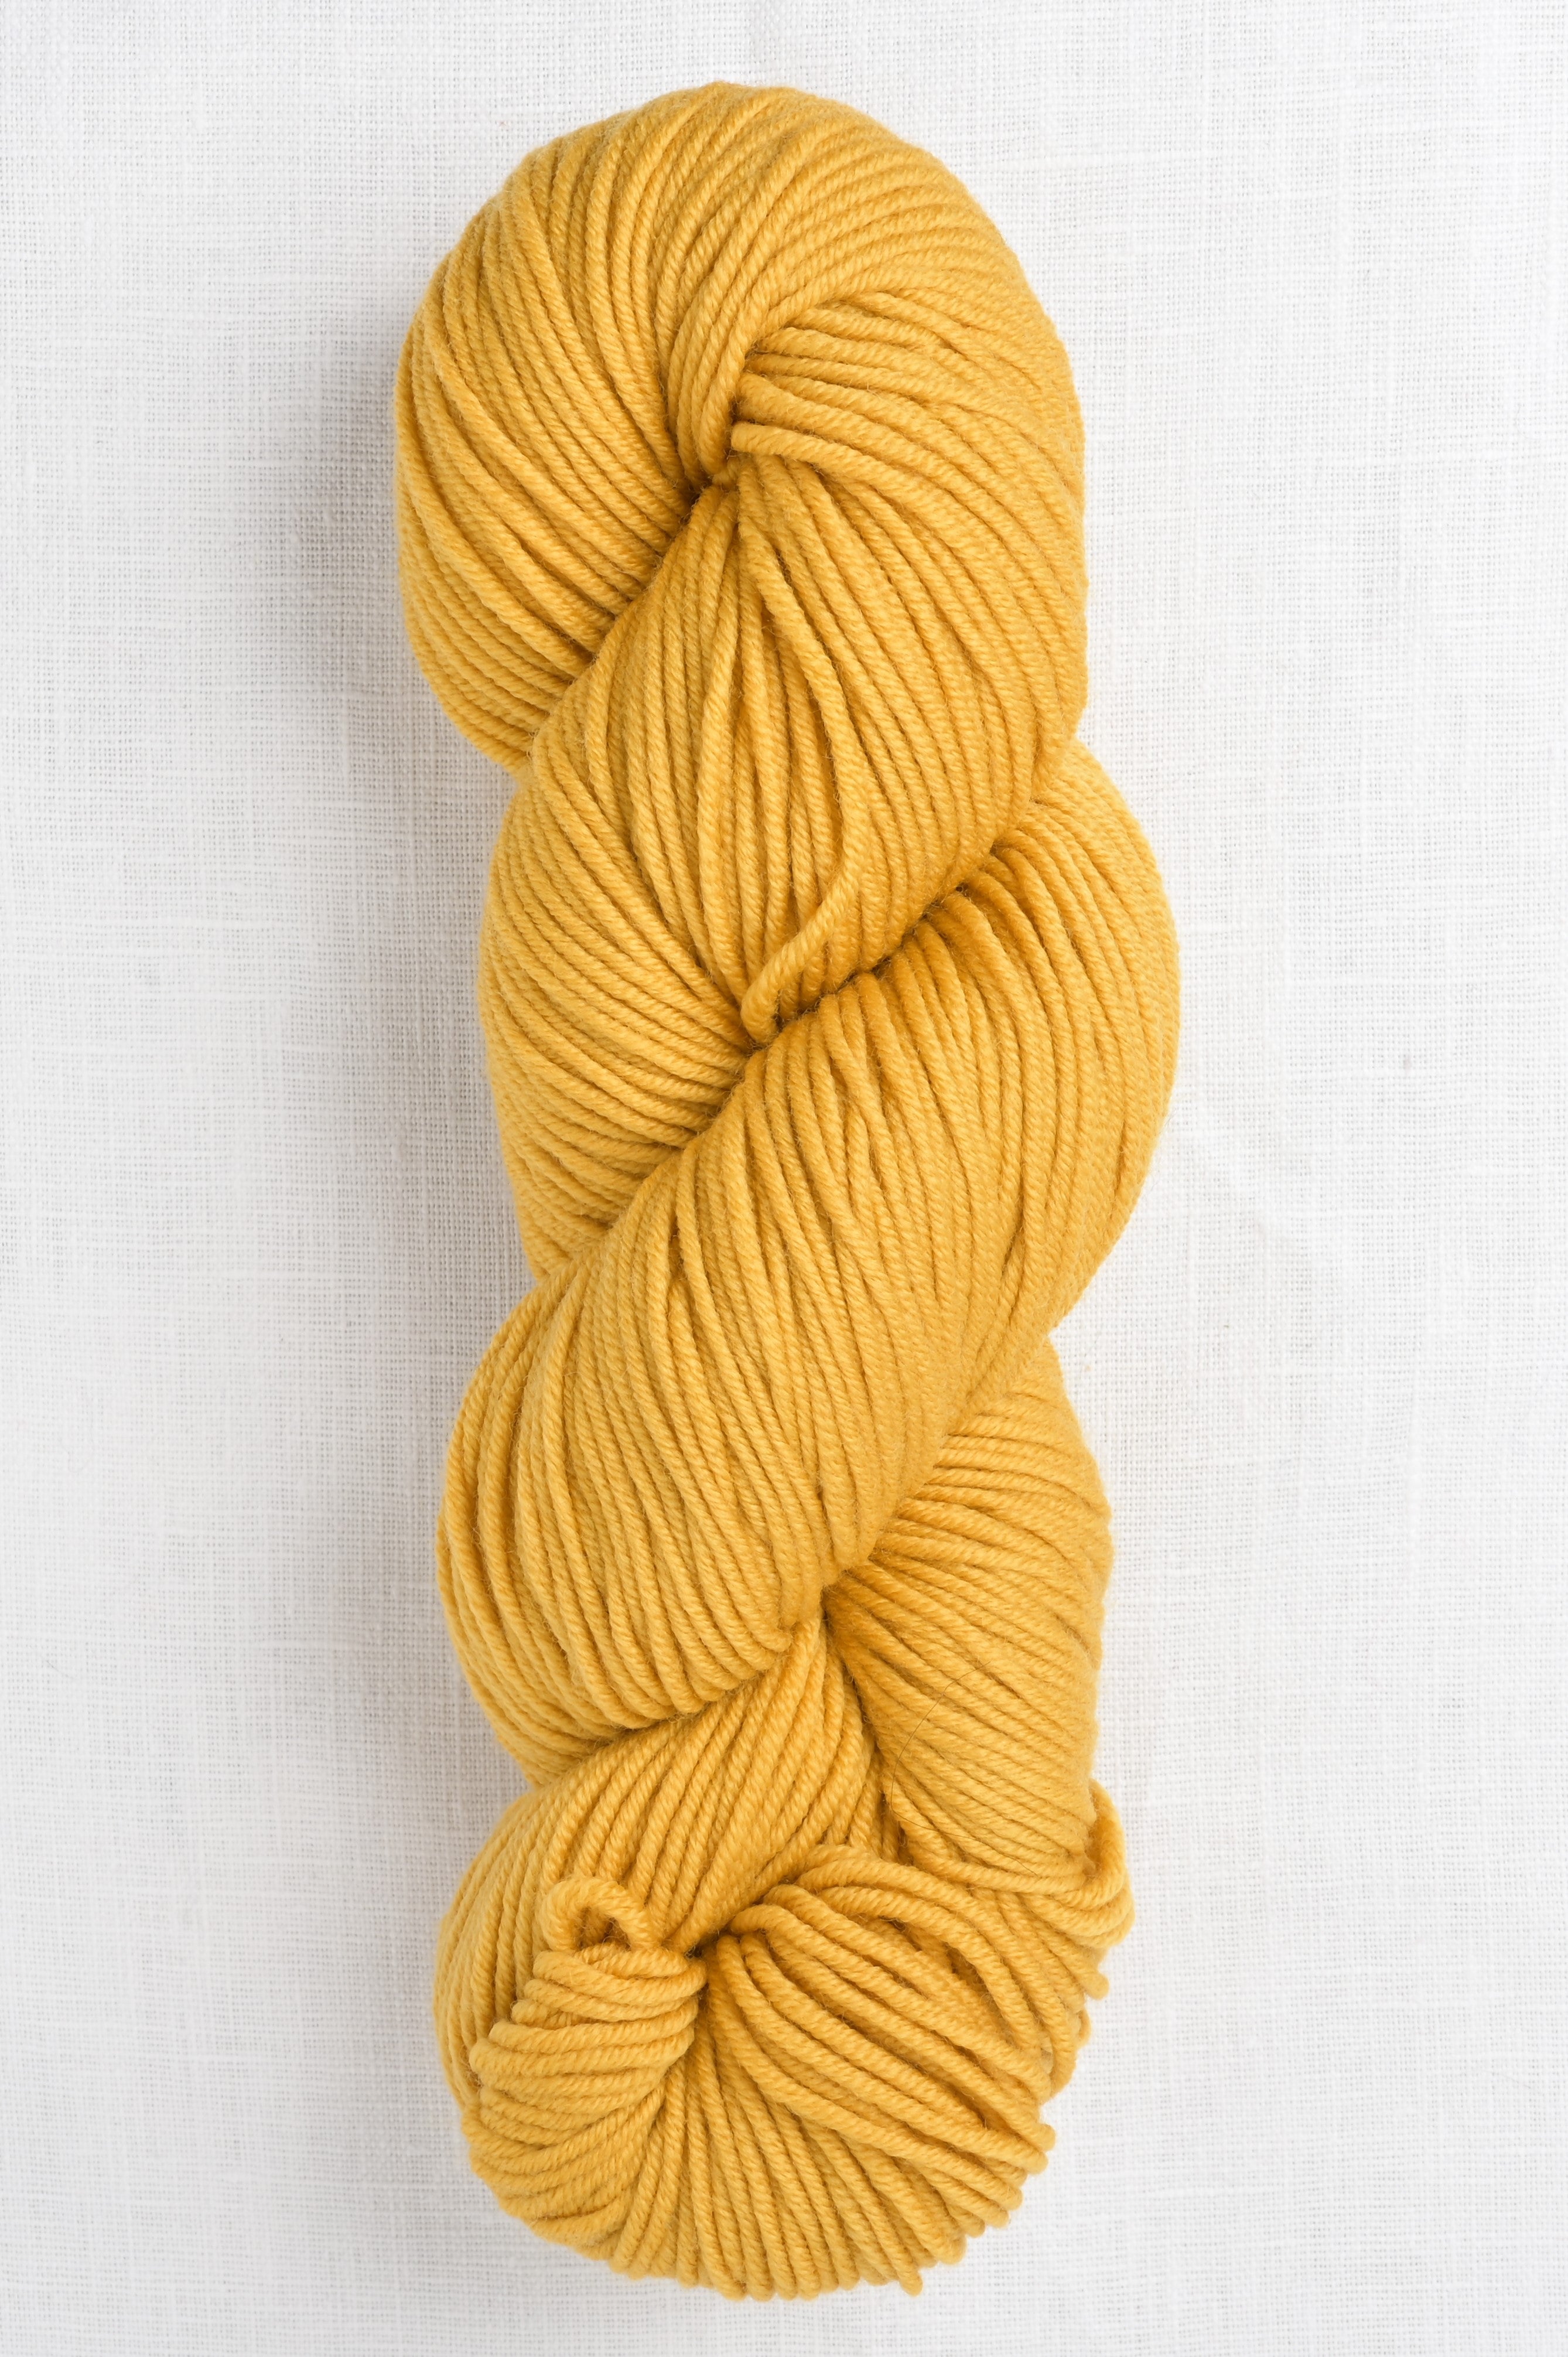 You're So Golden - Classic Worsted - 100% Superwash Merino Wool Yarn